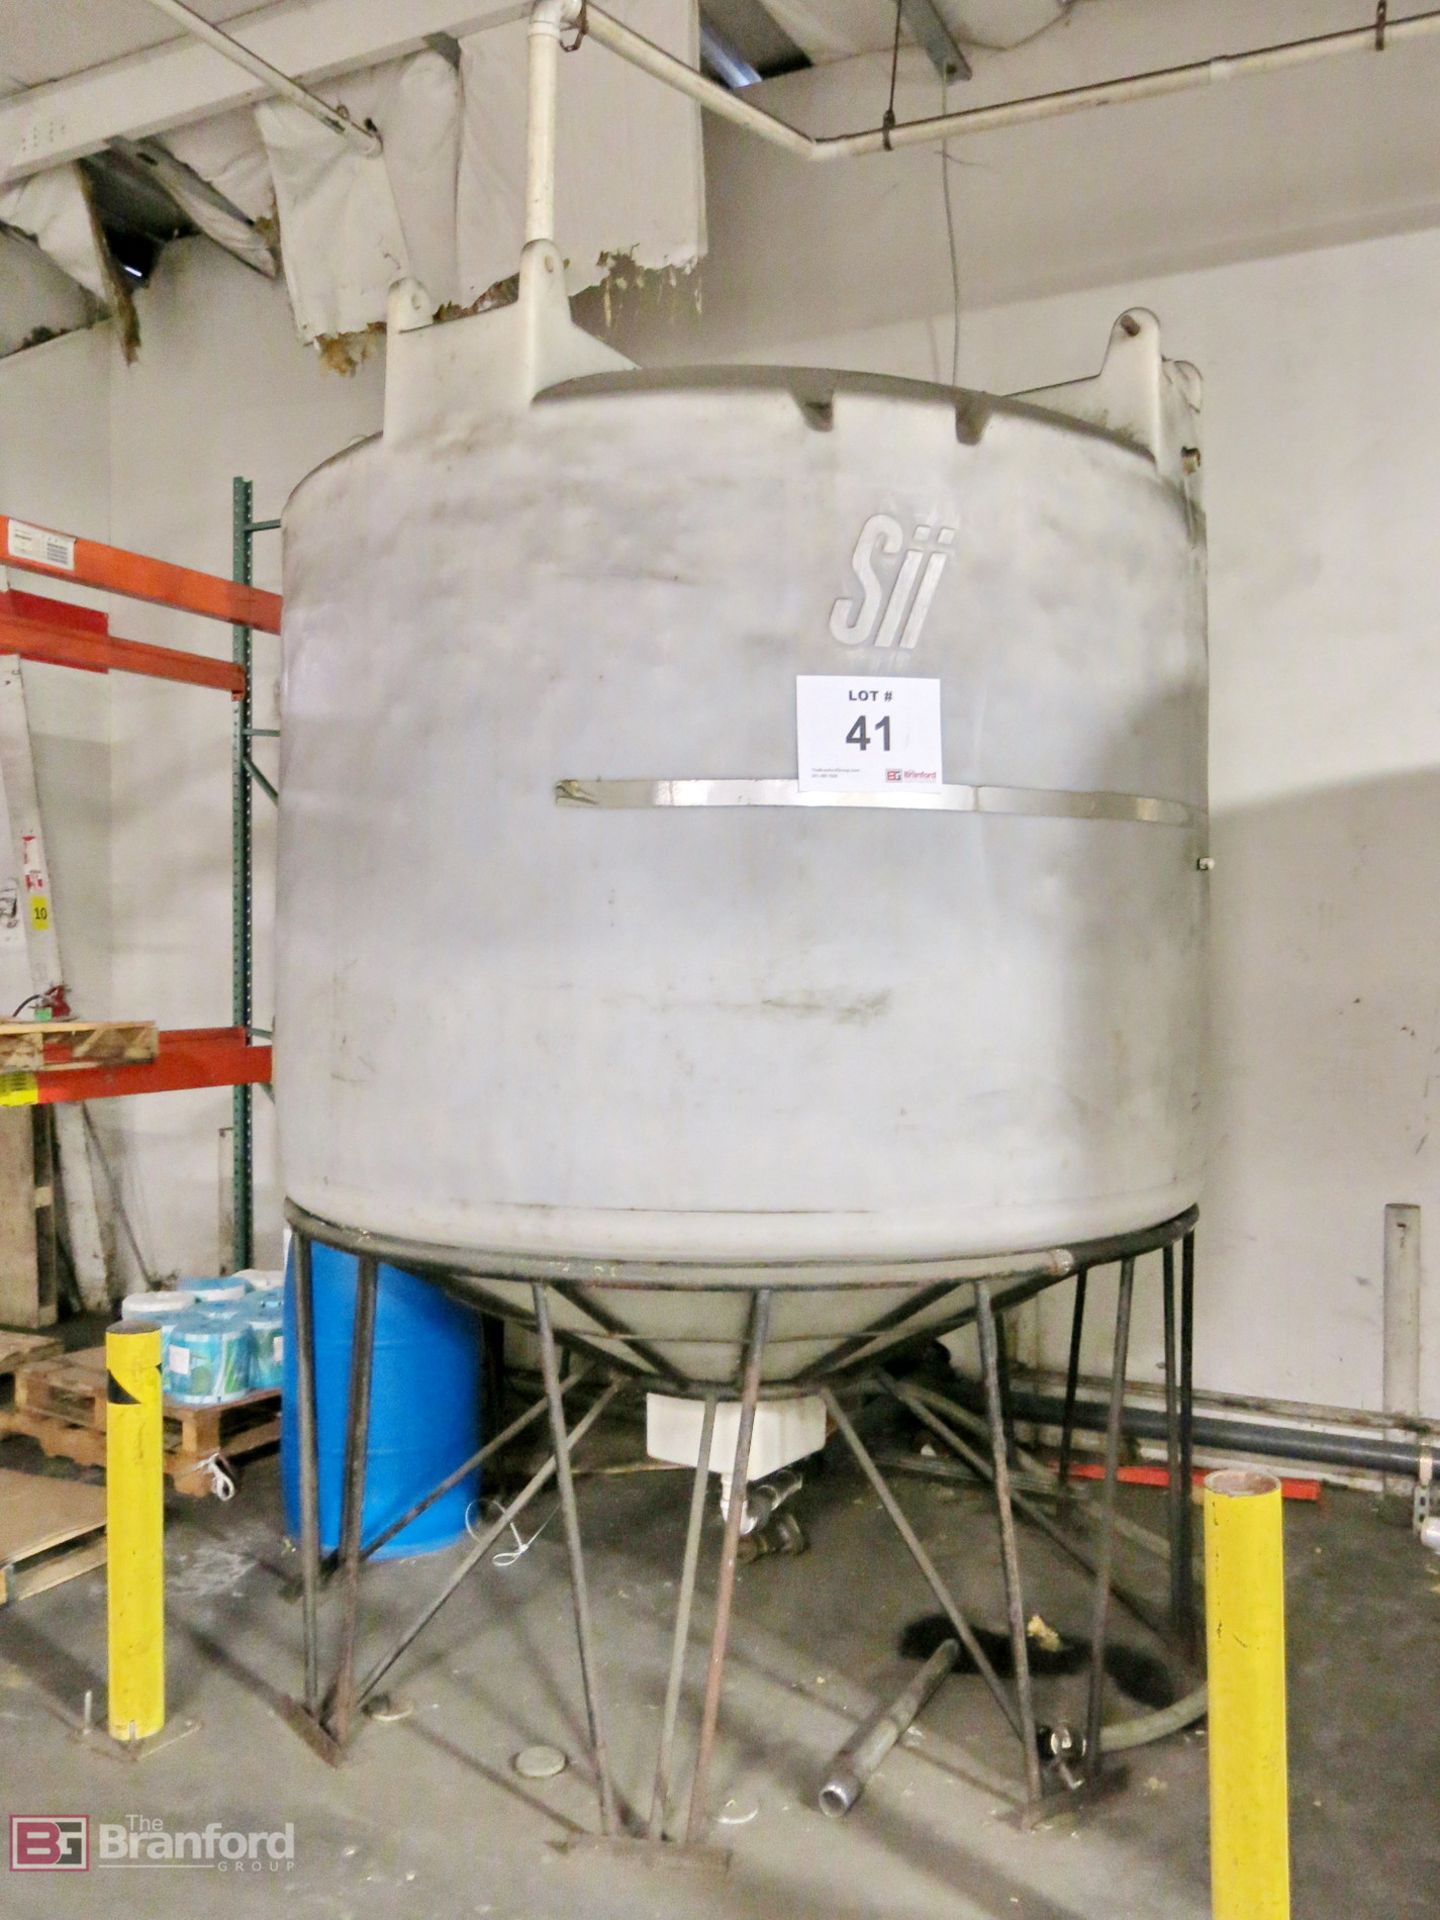 SII approx. 1000-gallon conical bottom polypropylene tank